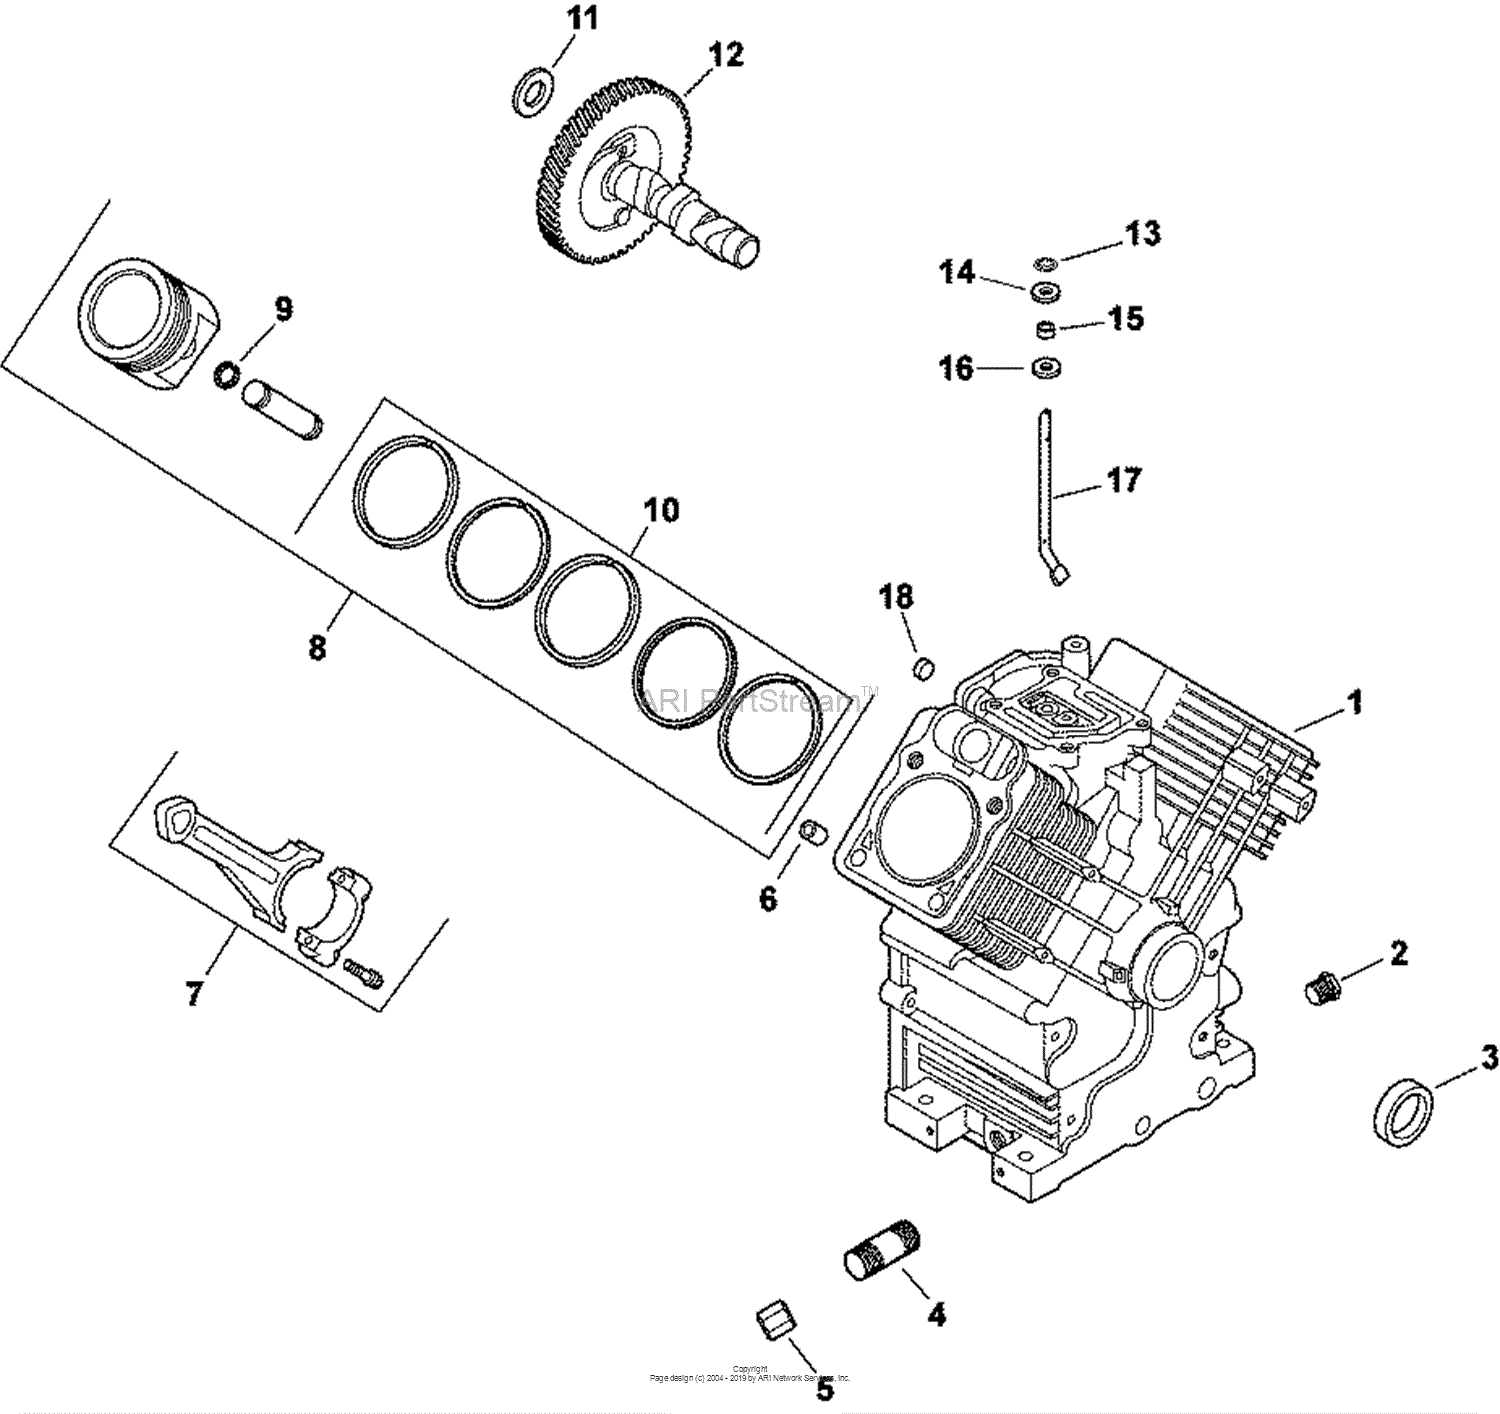 Kohler Engine Parts Diagram : Kohler Carburetor - Part No. 32 853 11-S - Repair your kohler engine, with oem air filters, spark plugs, oil filters, starters, and kohler maintenance kits.